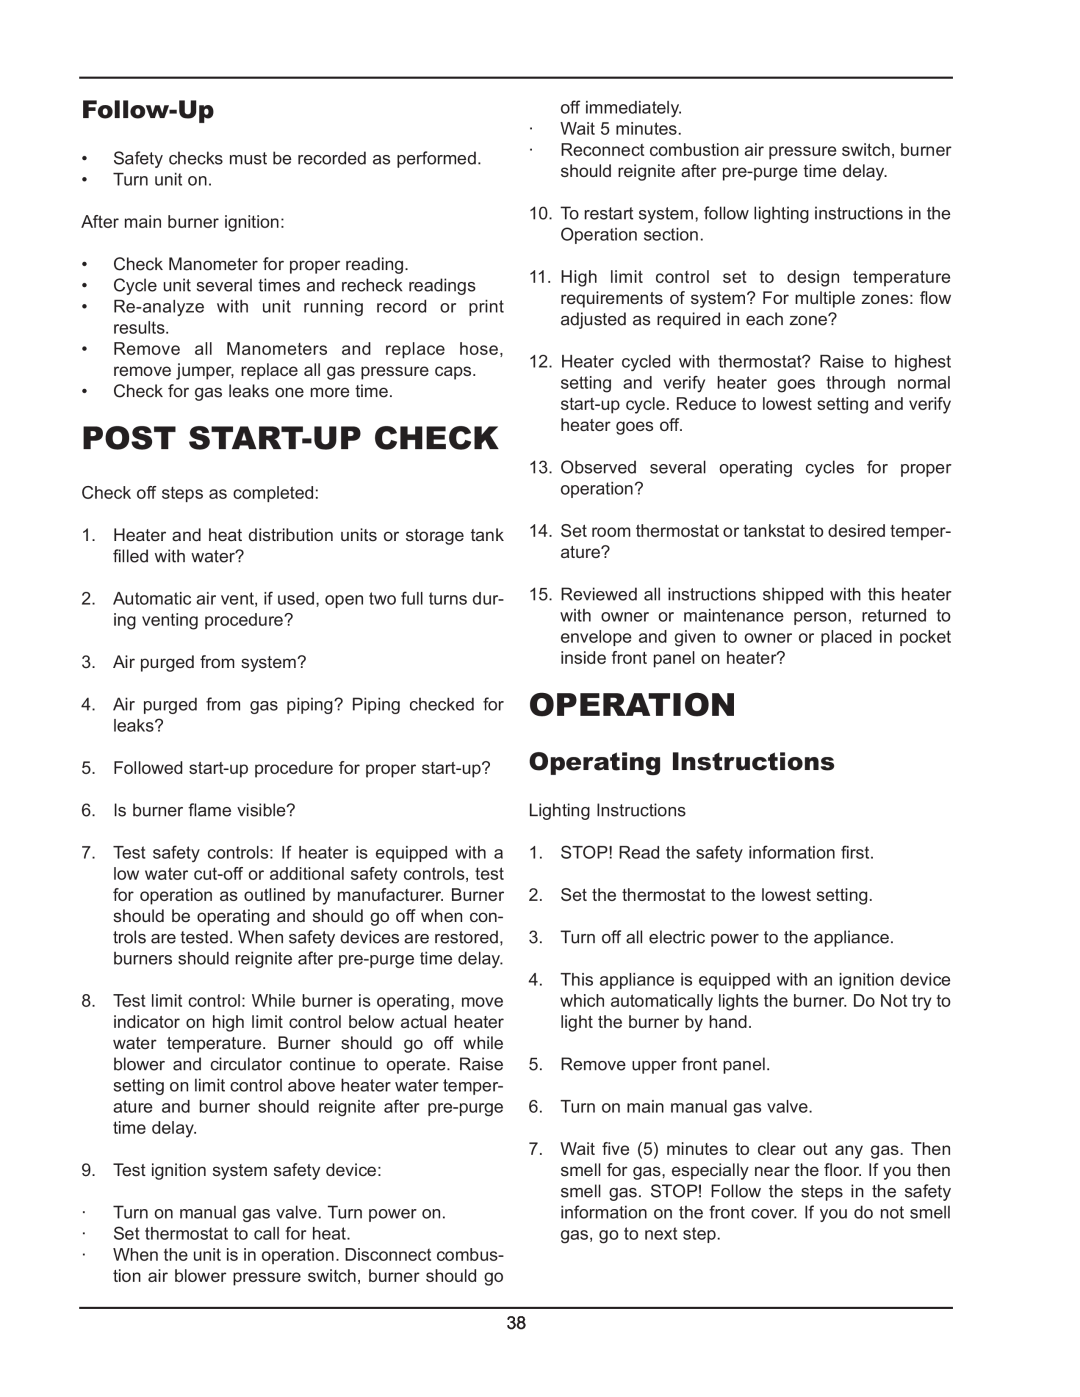 Raypak 122-322 manual Post Start-Upcheck, Operation, Follow-Up, Operating Instructions 